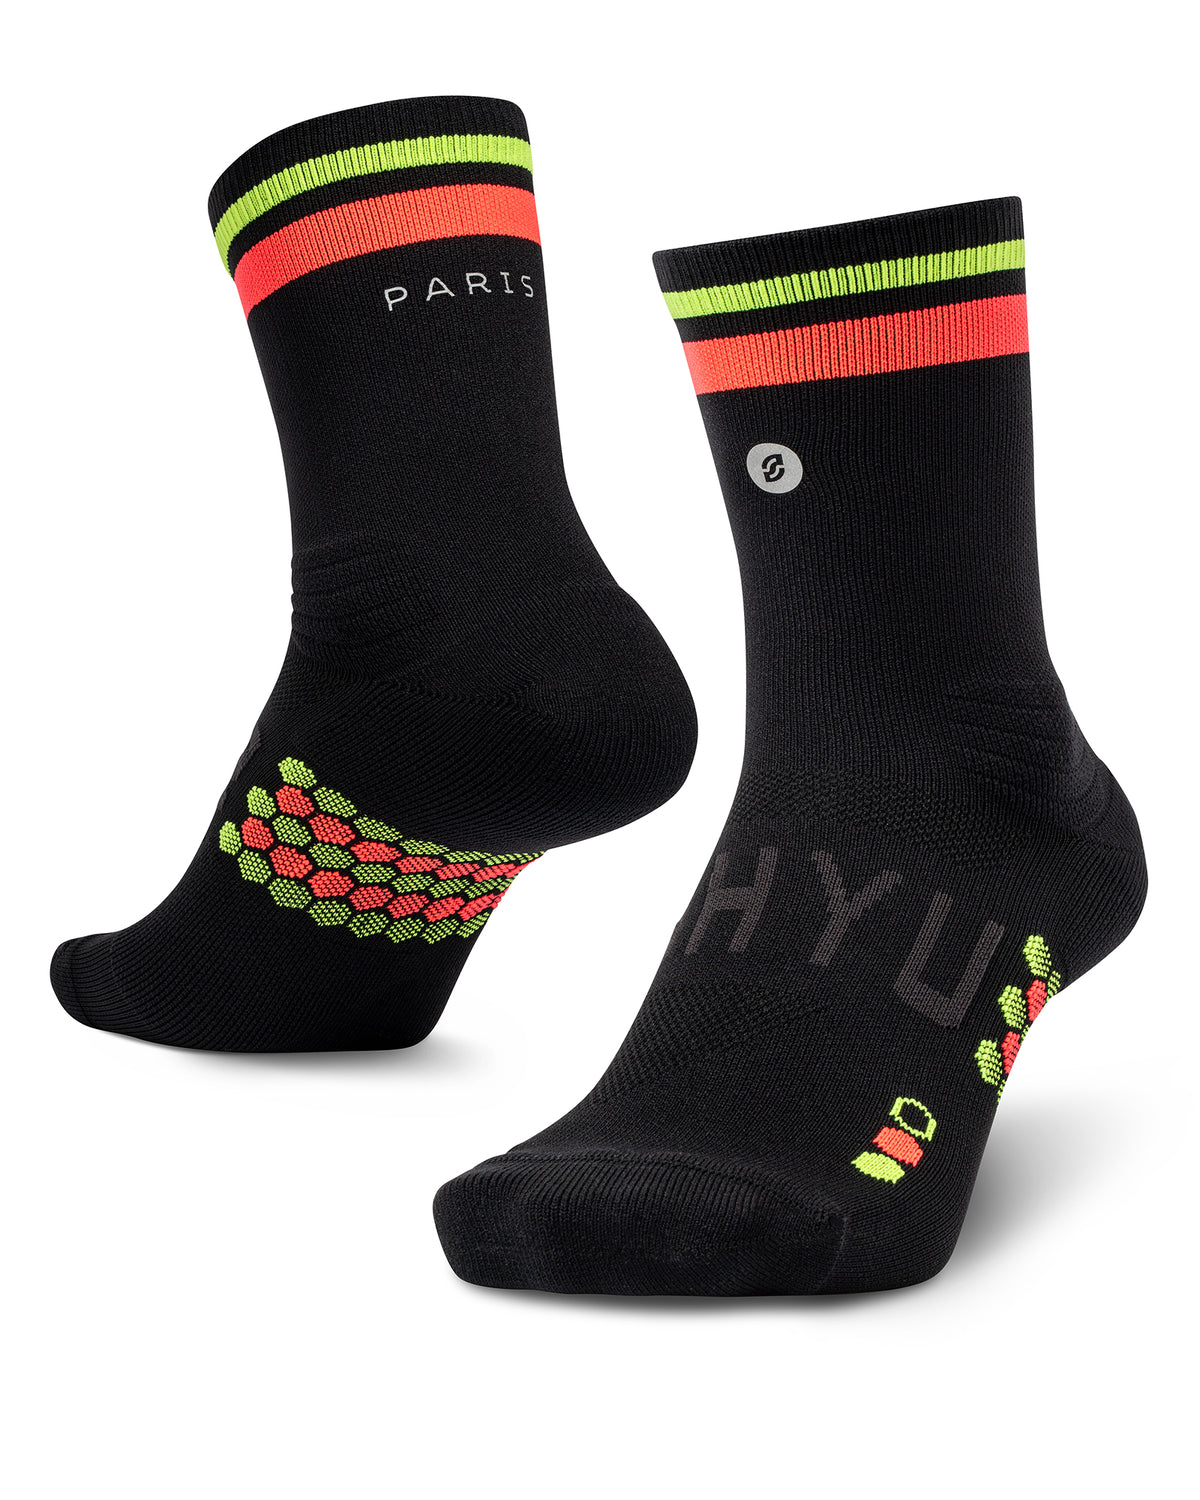 SHYU racing socks - black | red | neon